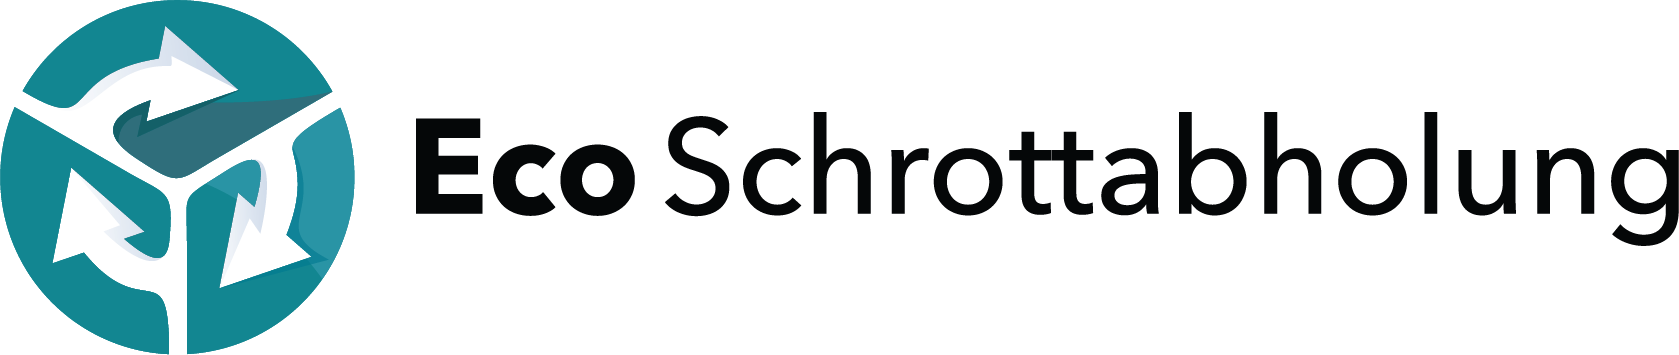 Eco_Schrottabholung_logo